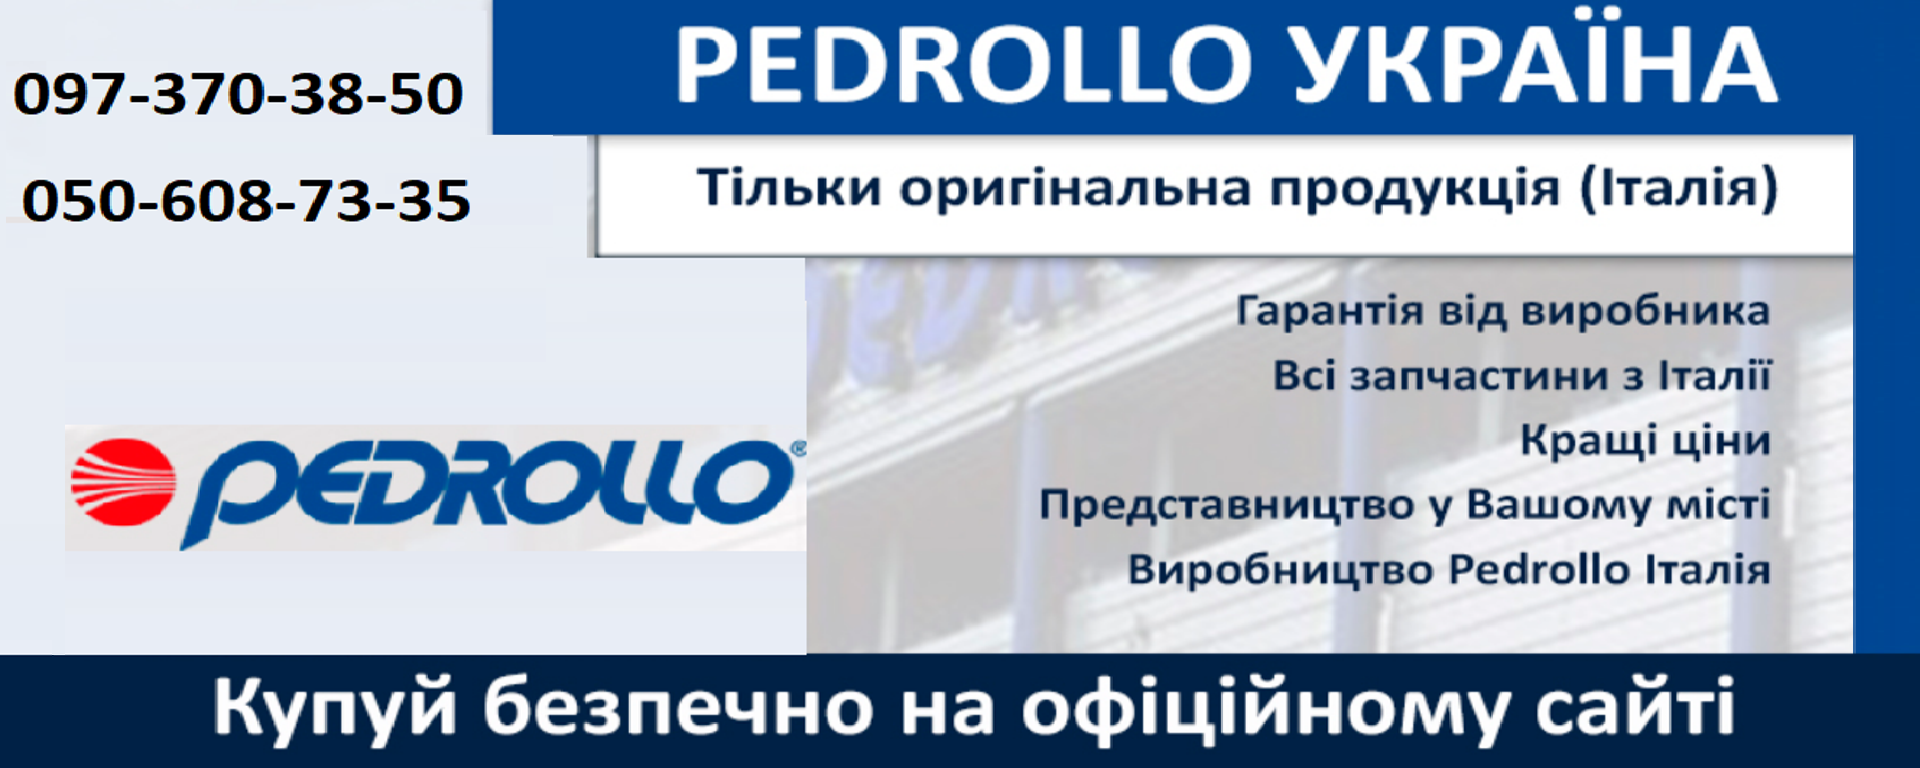 Pedrollo Украина - скидка на насосы Pedrollo